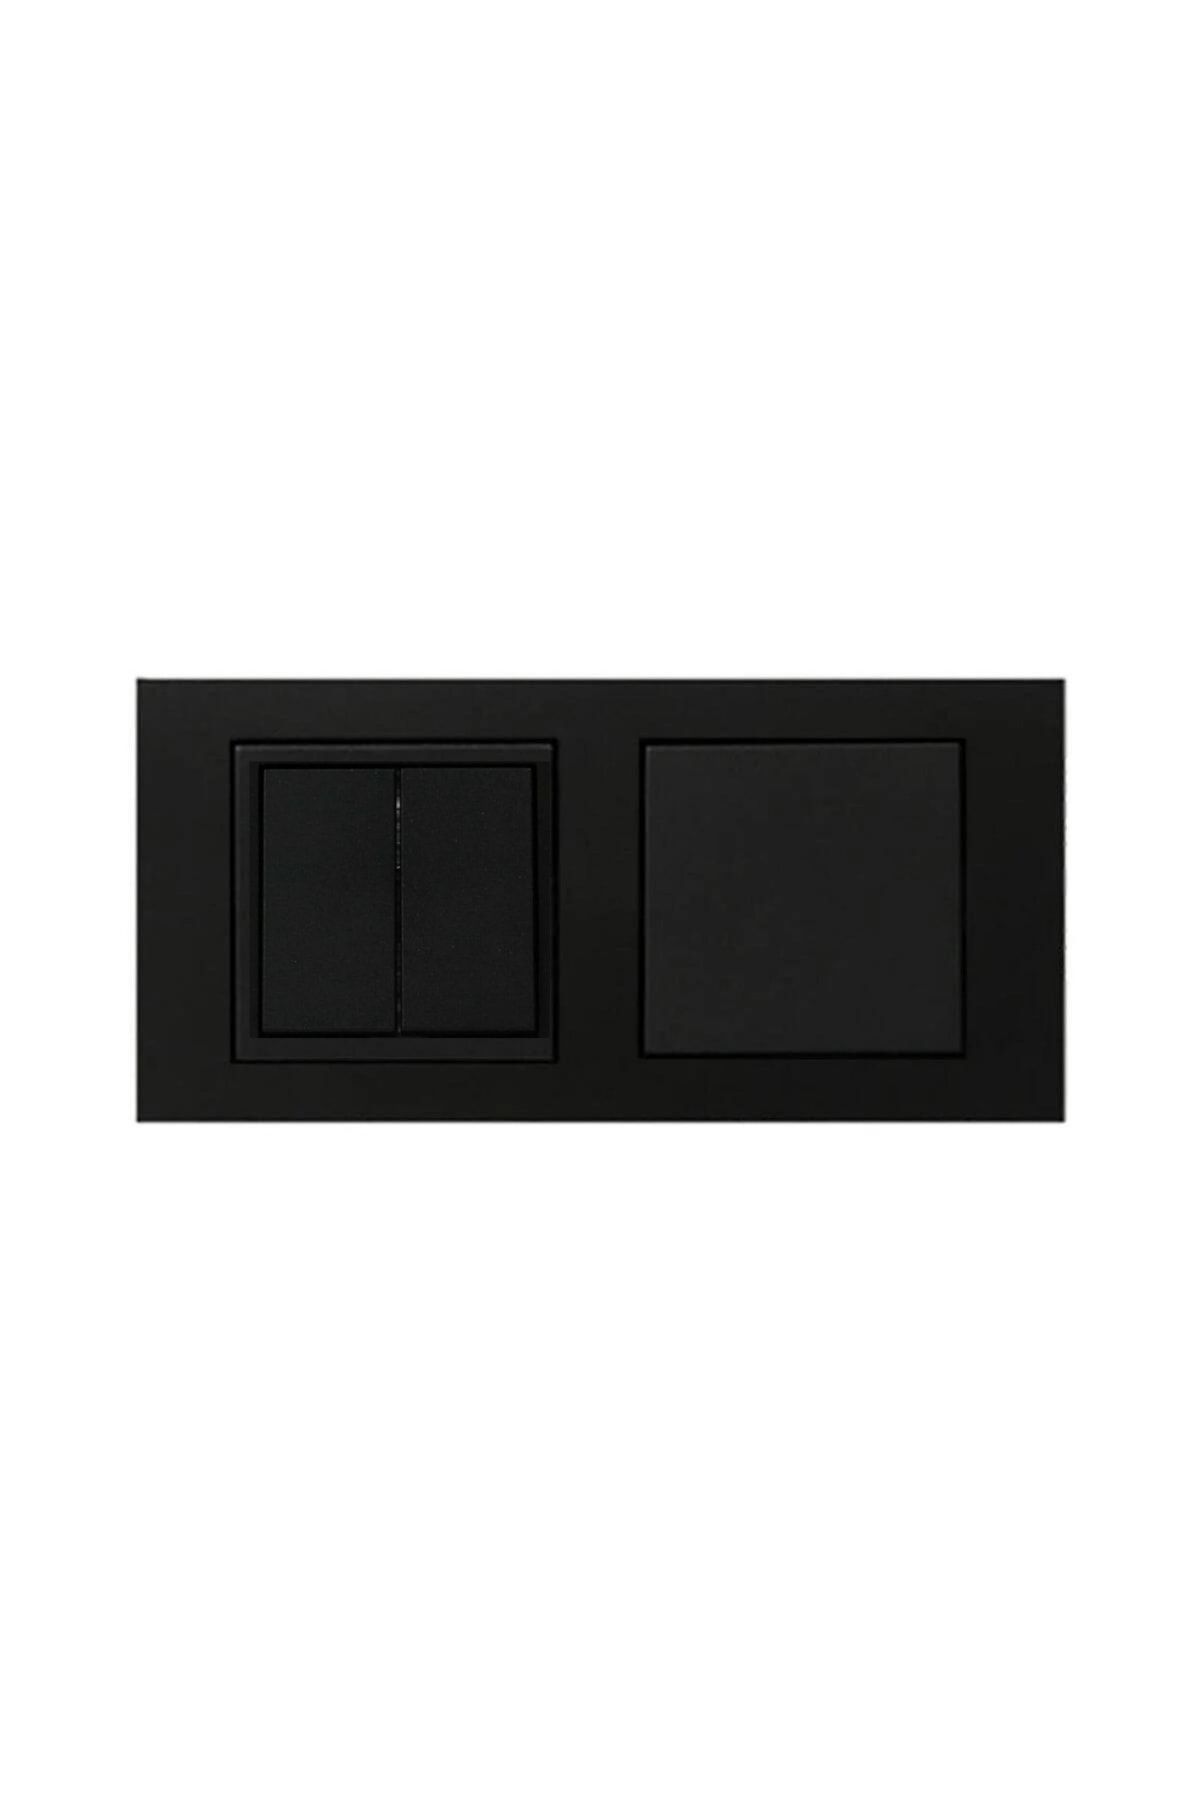 OVİVO Grano Siyah Anahtar + Komütatör (ikili) Anahtar Set